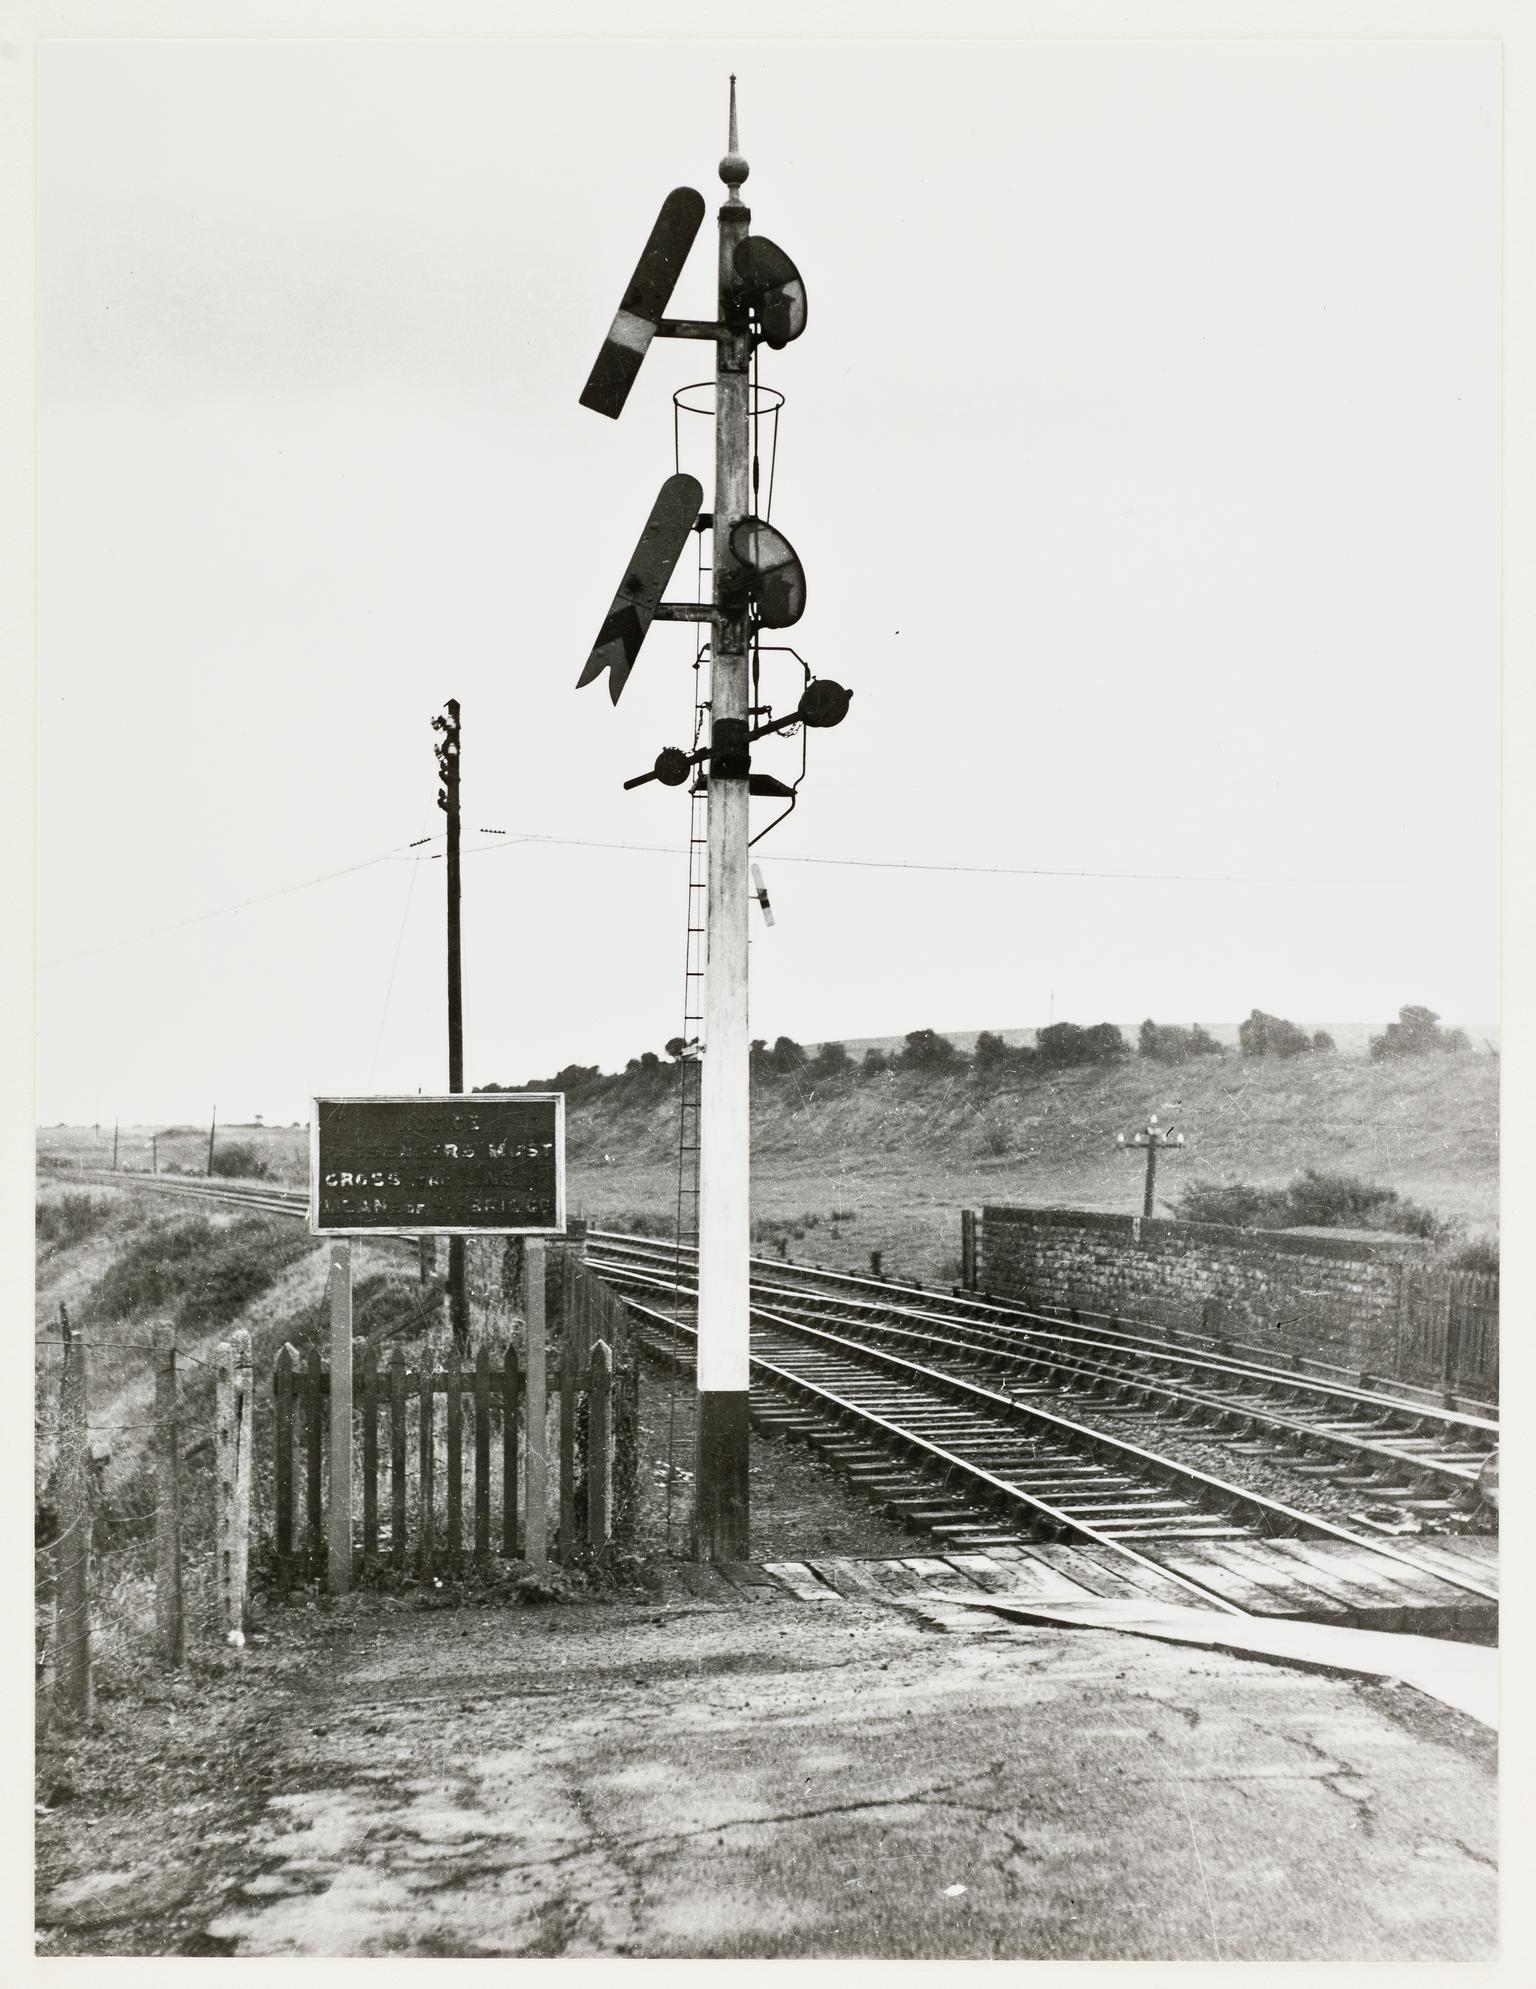 Taff Vale Railway, photograph